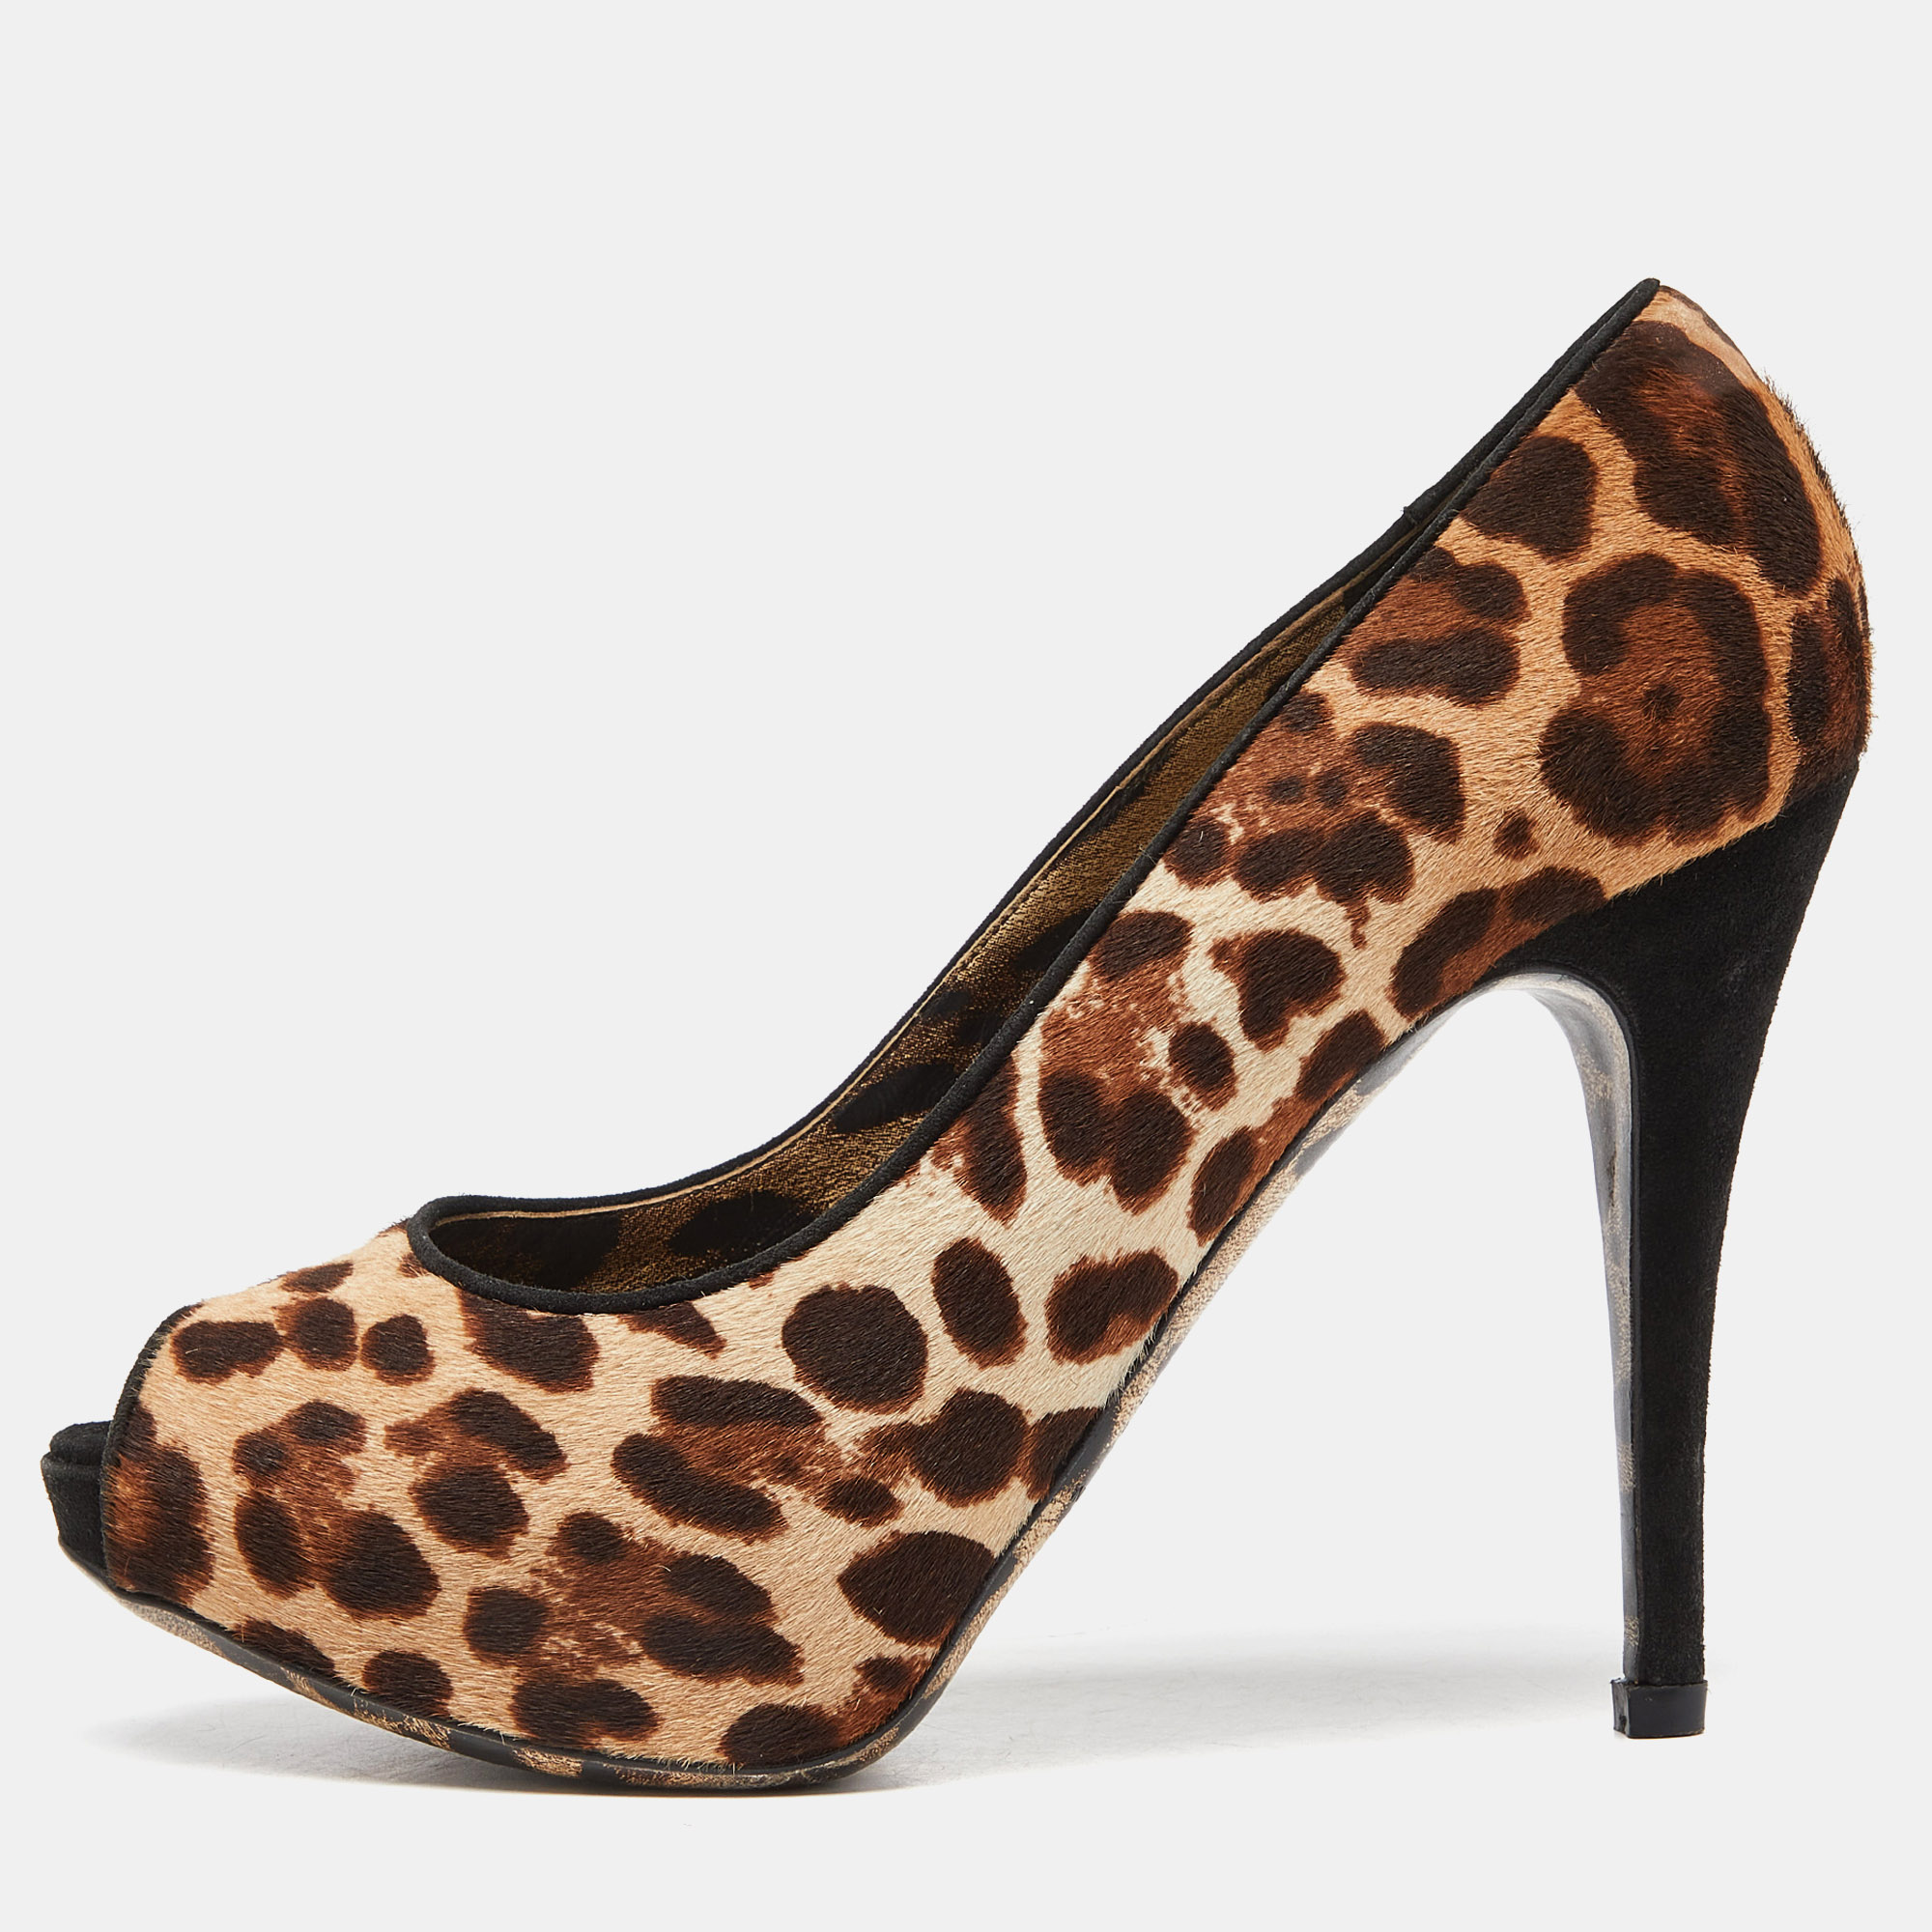 Dolce & gabbana beige/brown leopard print calfhair peep toe pumps size 39